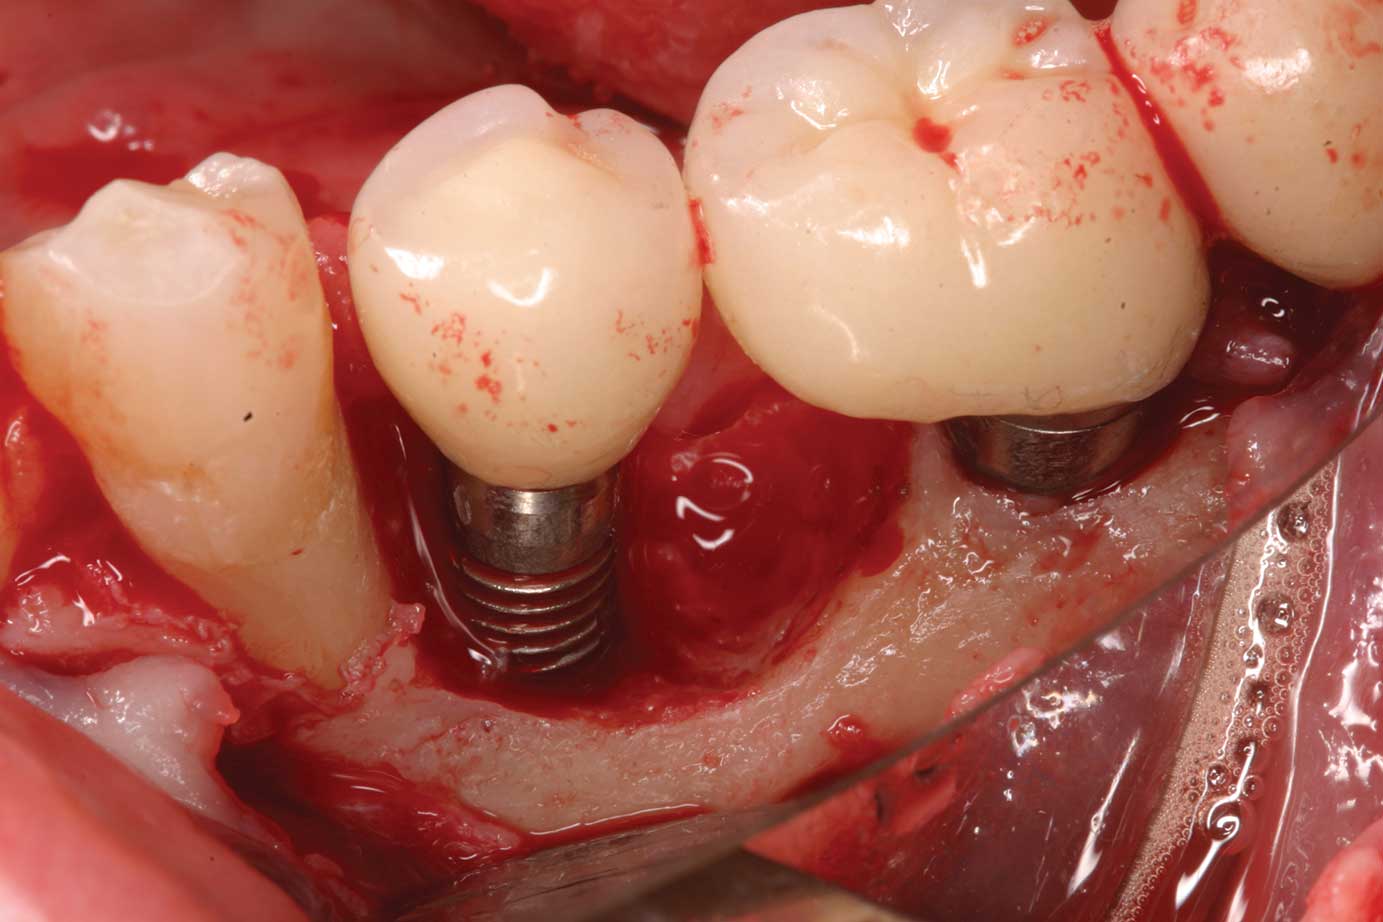 عوارض کاشت دندان